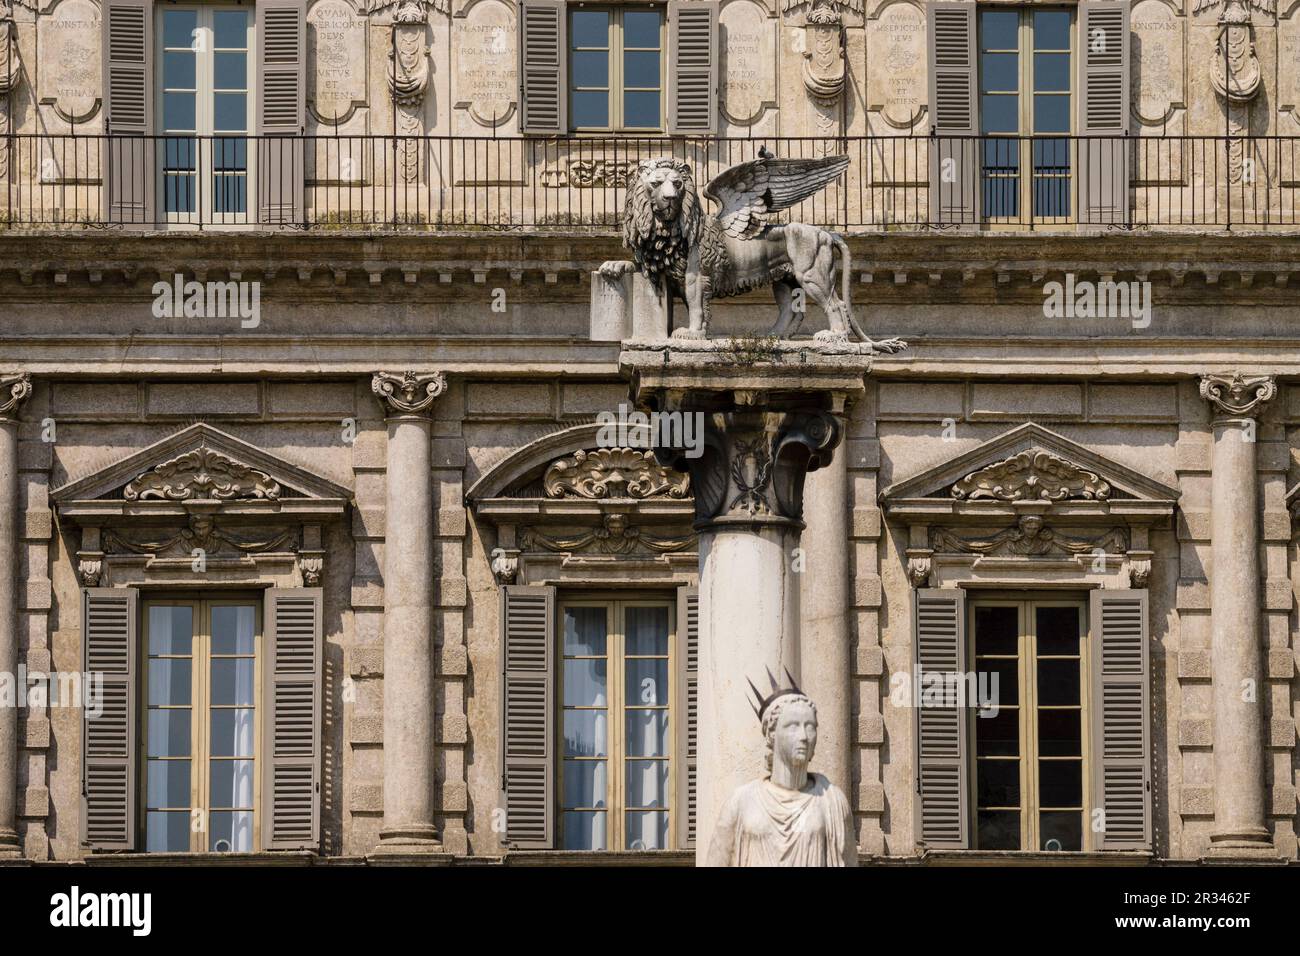 leon de San Marcos, simbolo de la republica de venecia frente al Palazzo Maffei , , Piazza delle Erbe , Verona, patrimonio de la humanidad, Veneto, Italia, Europa. Stock Photo